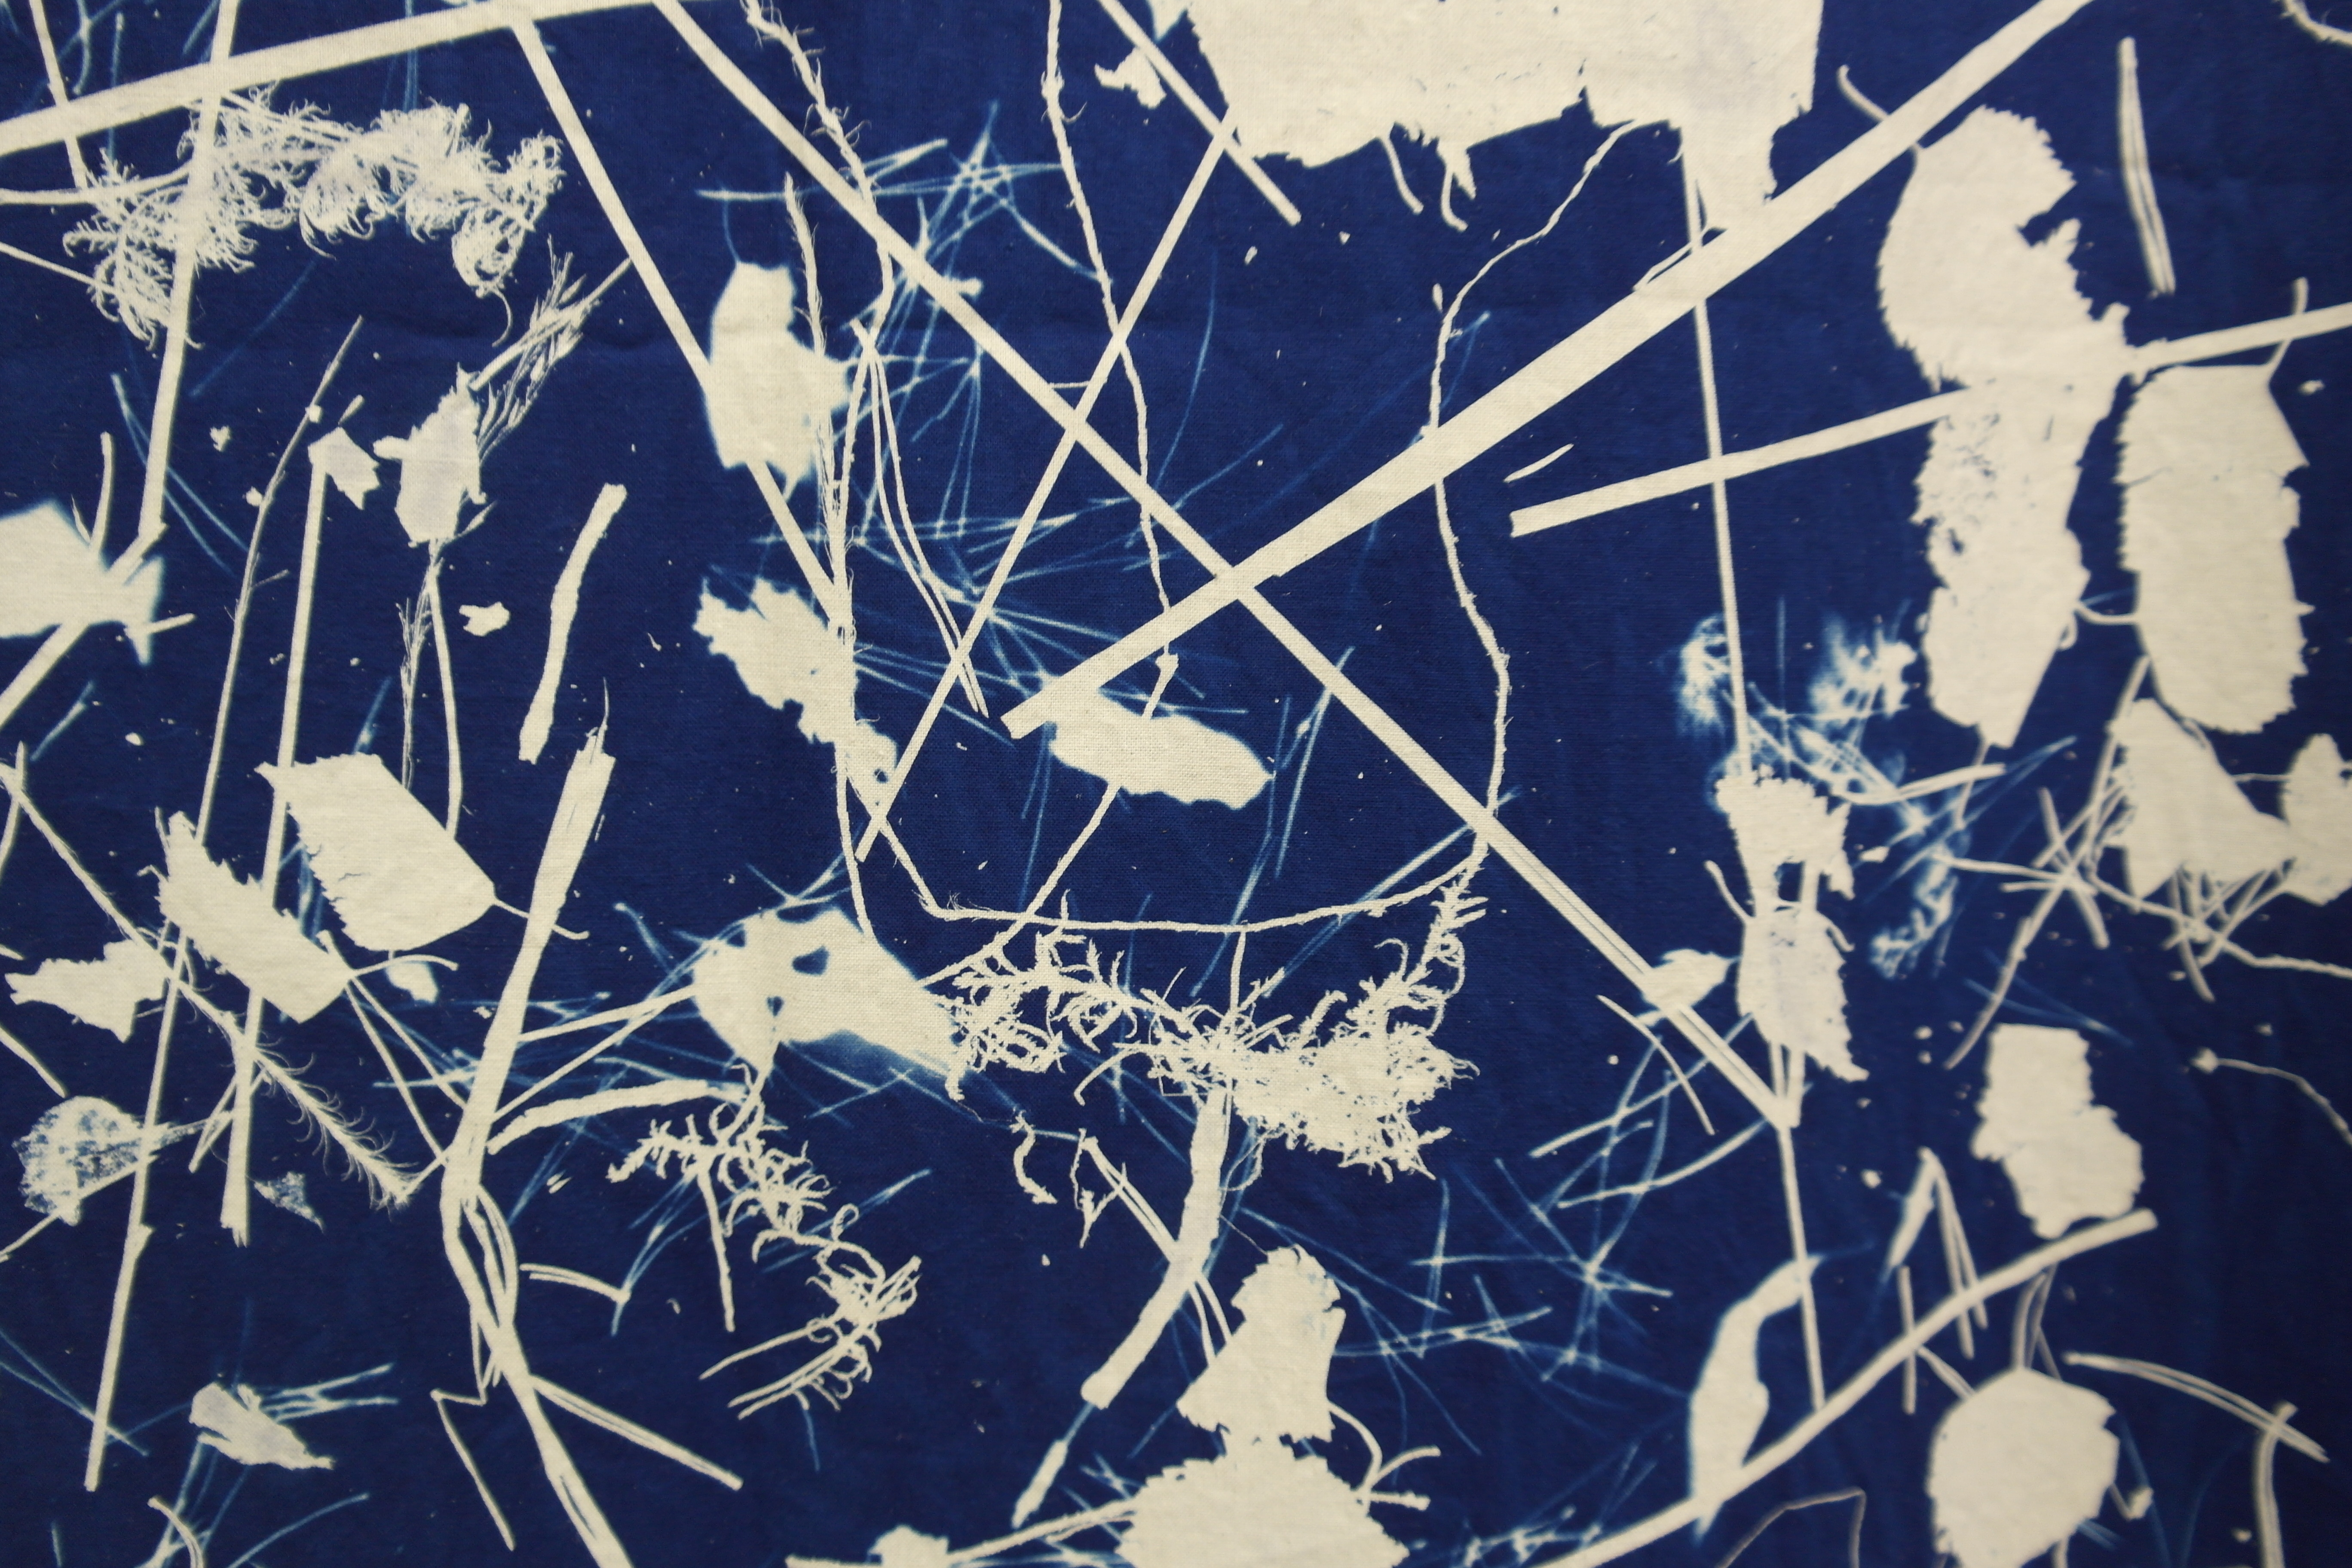 Zuzanna Rokita; 13052016134962.23725.761, cyanotype, textil, 100 x 150 cm, 2016, detail